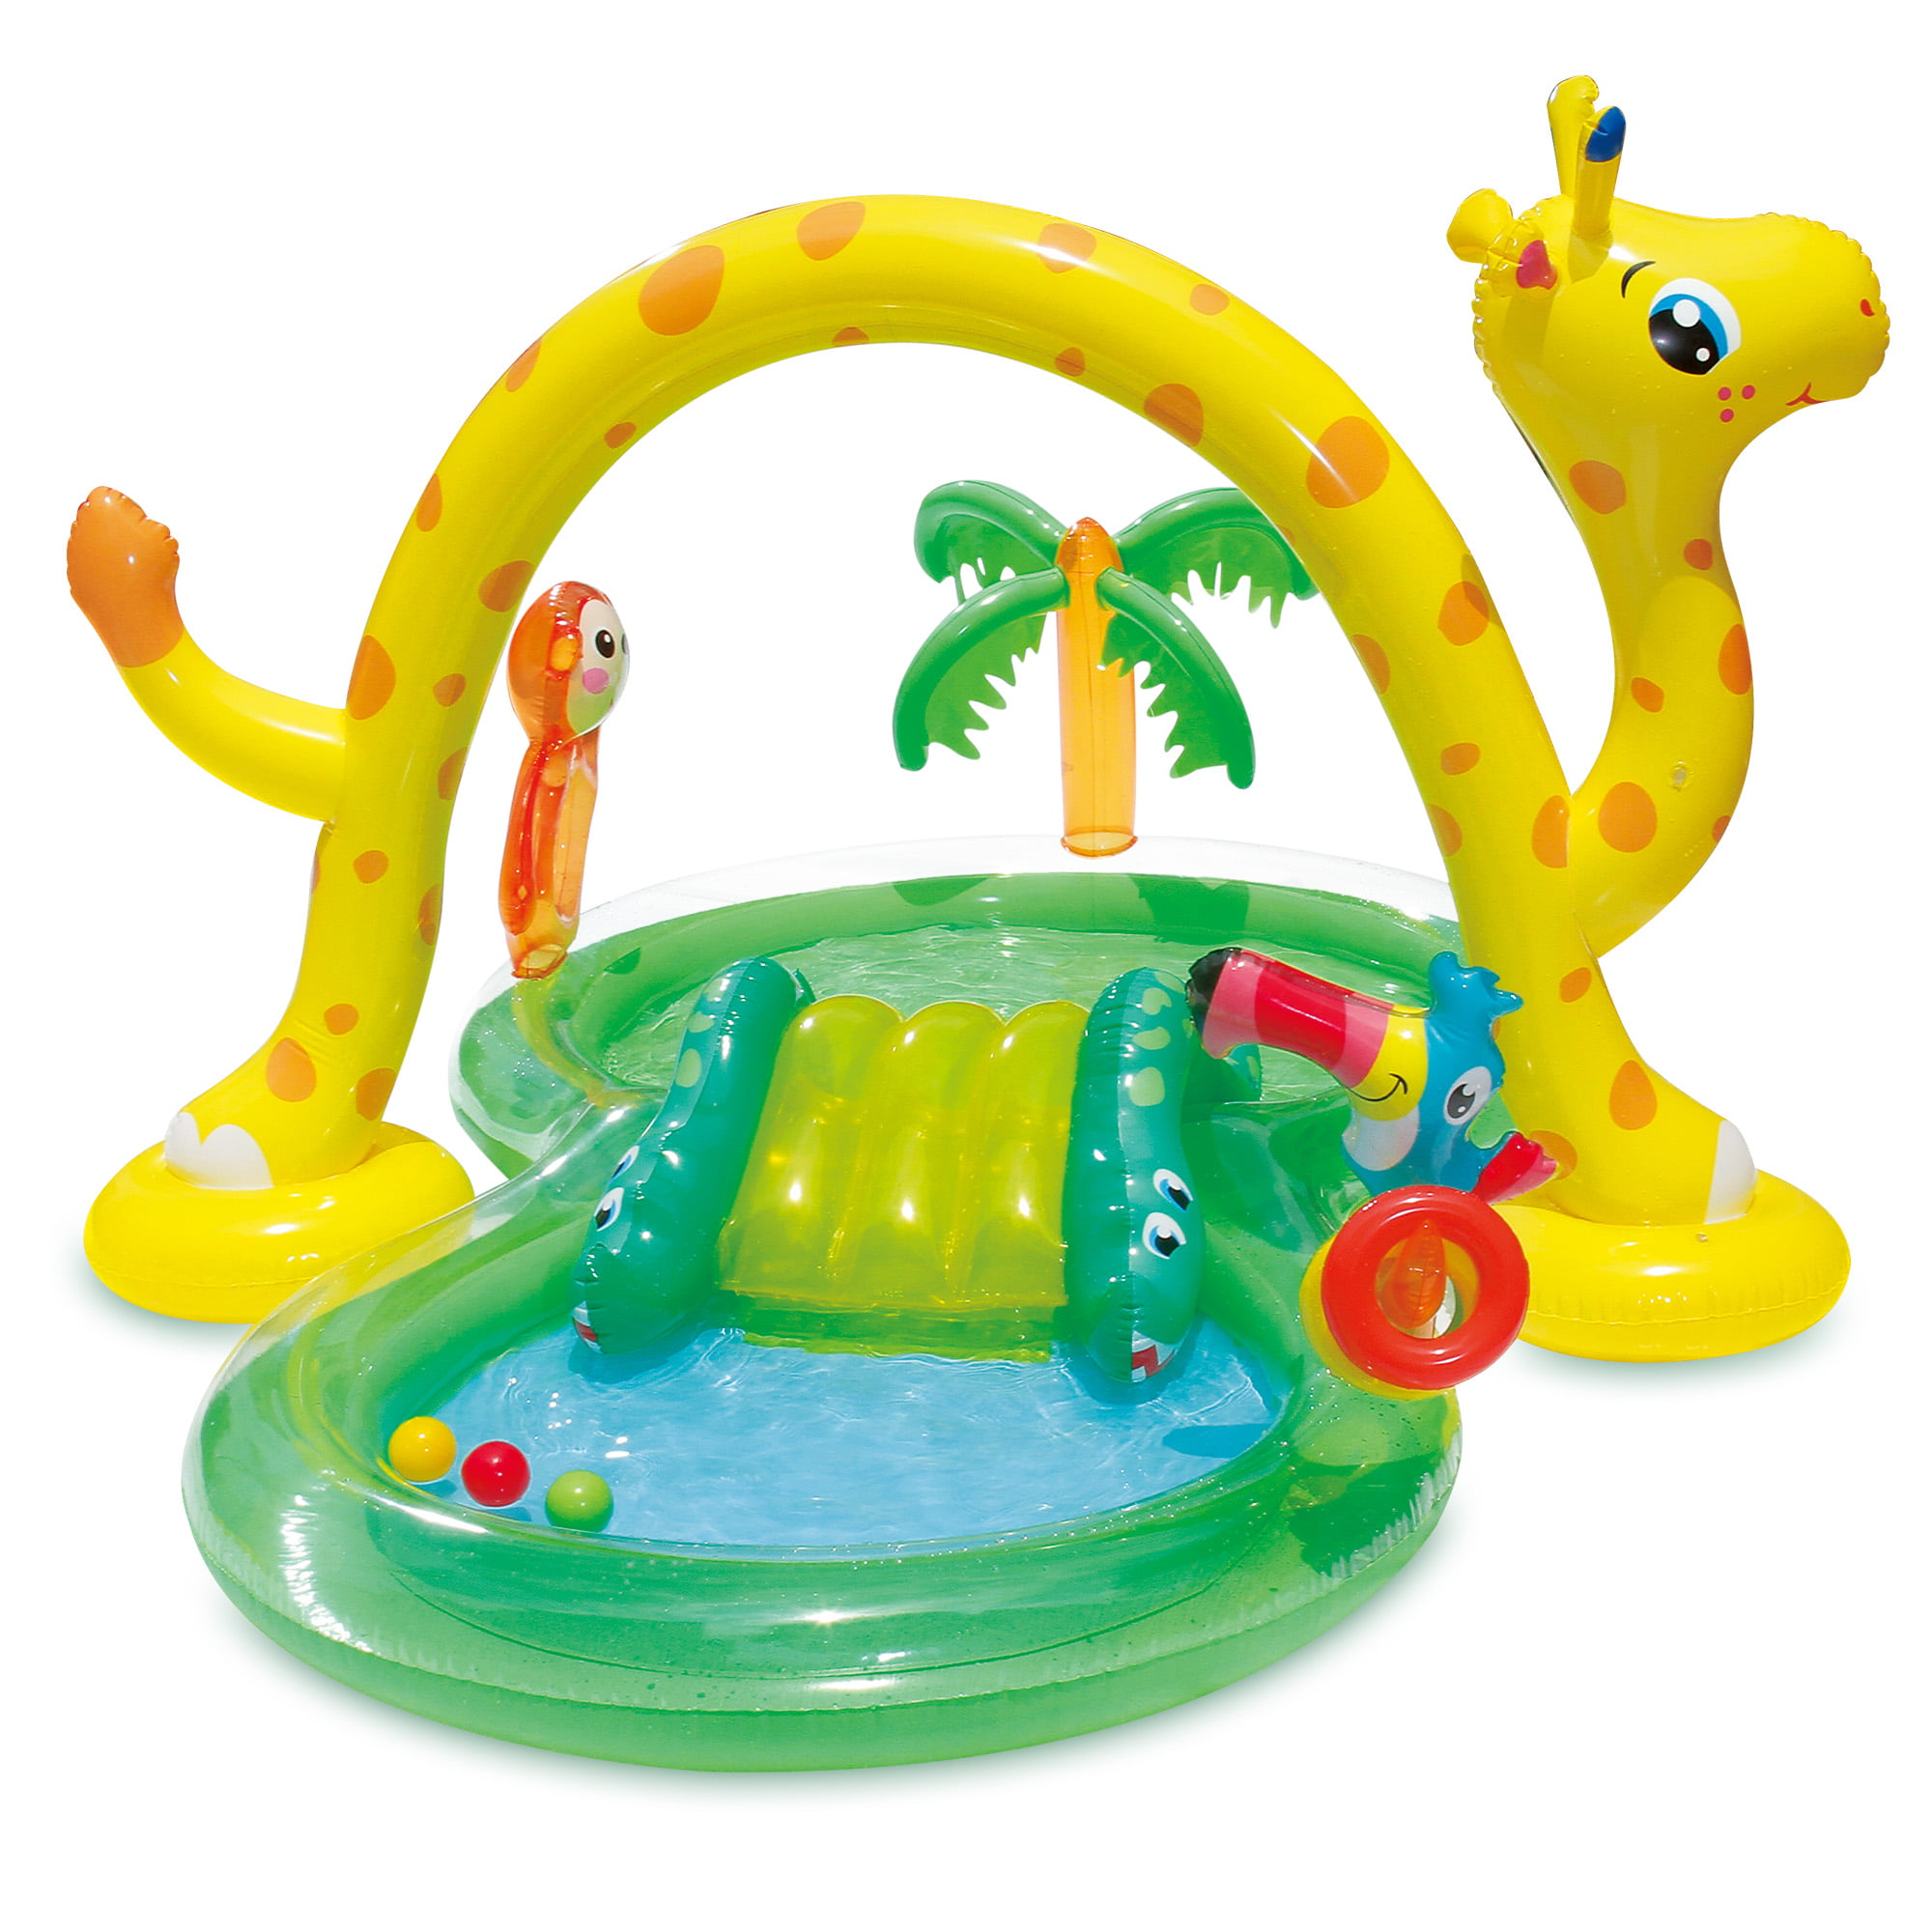 Intex 96" x 78" x 28" Inflatable Jungle Adventure Play Center Spray Kiddie Pool 